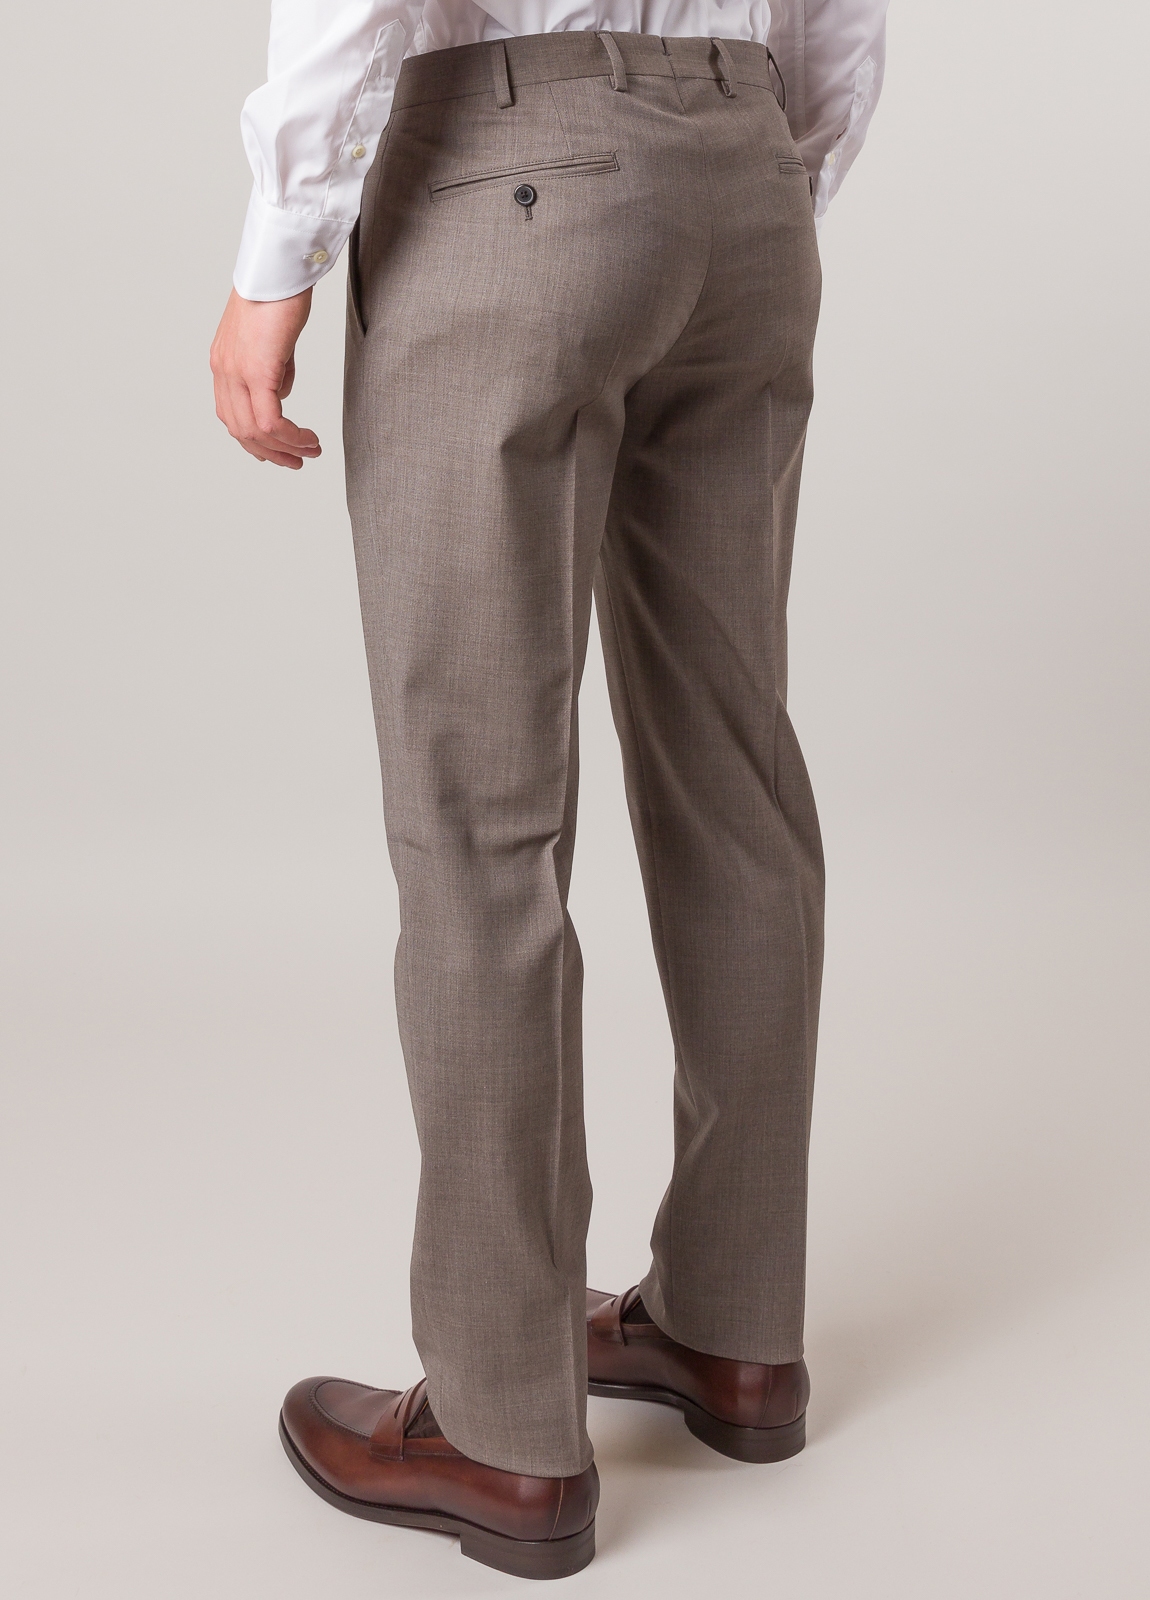 Pantalón vestir FUREST COLECCION color topo - Ítem2